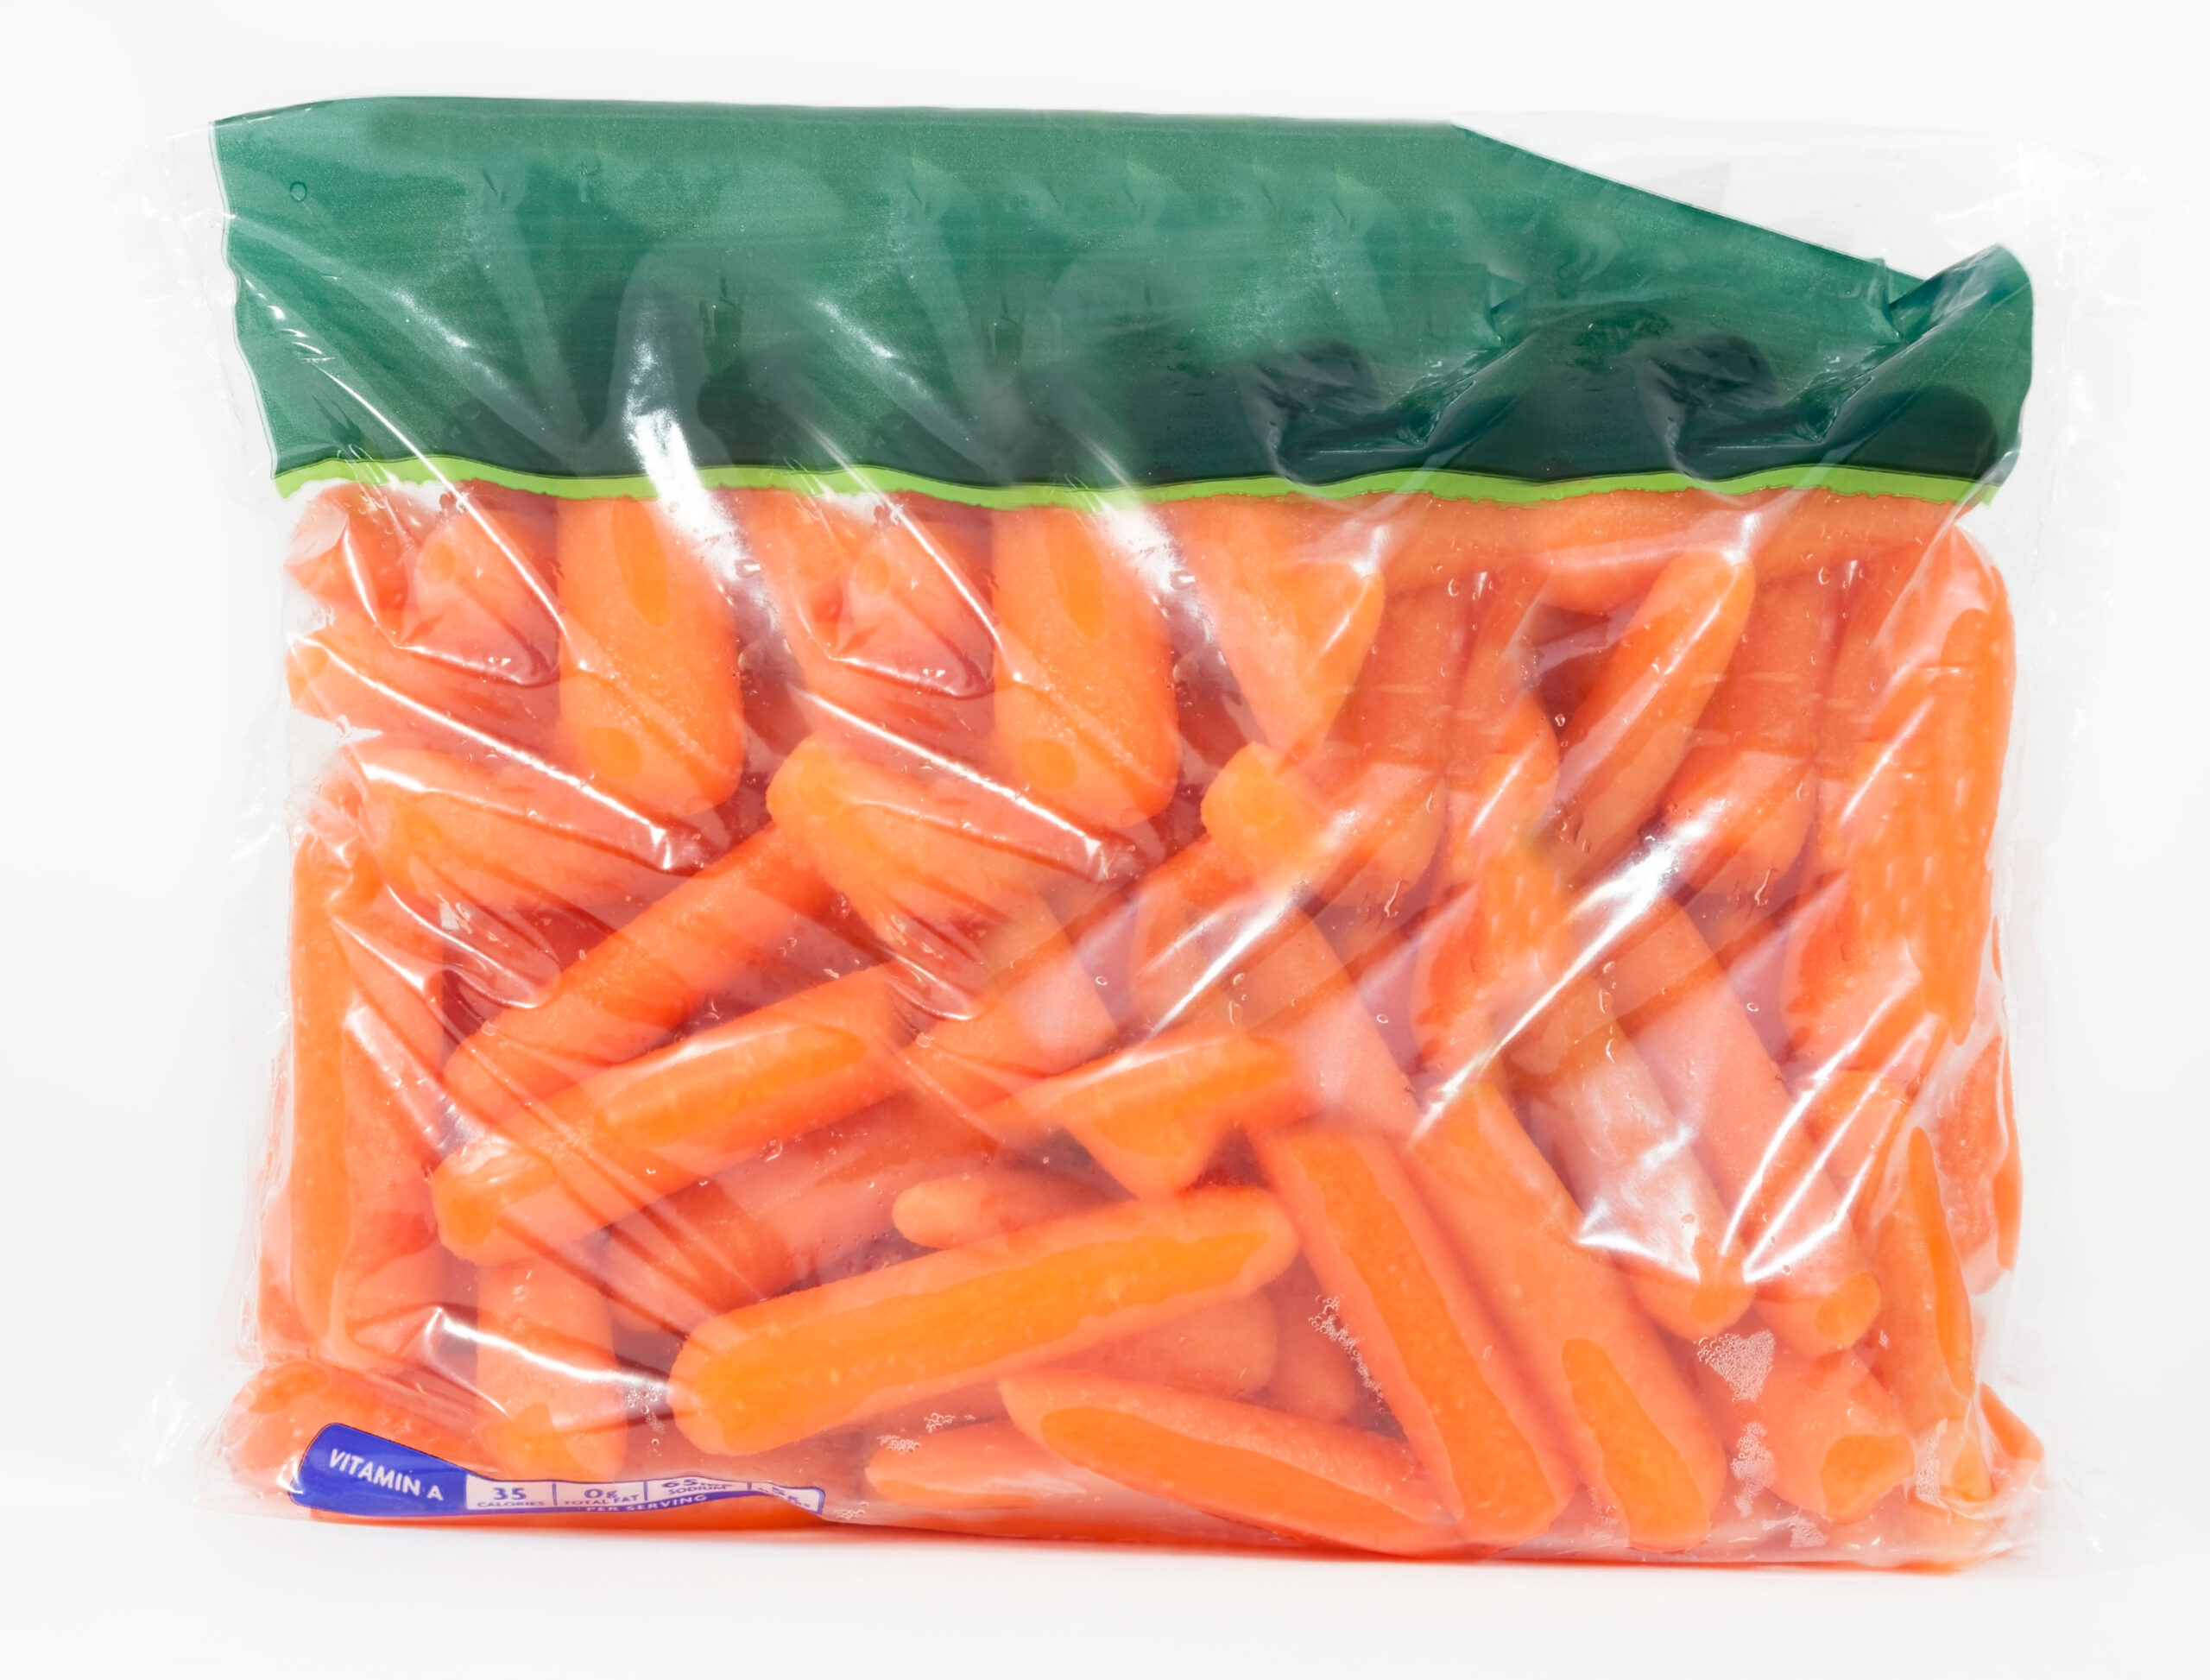 Produce bag carottes